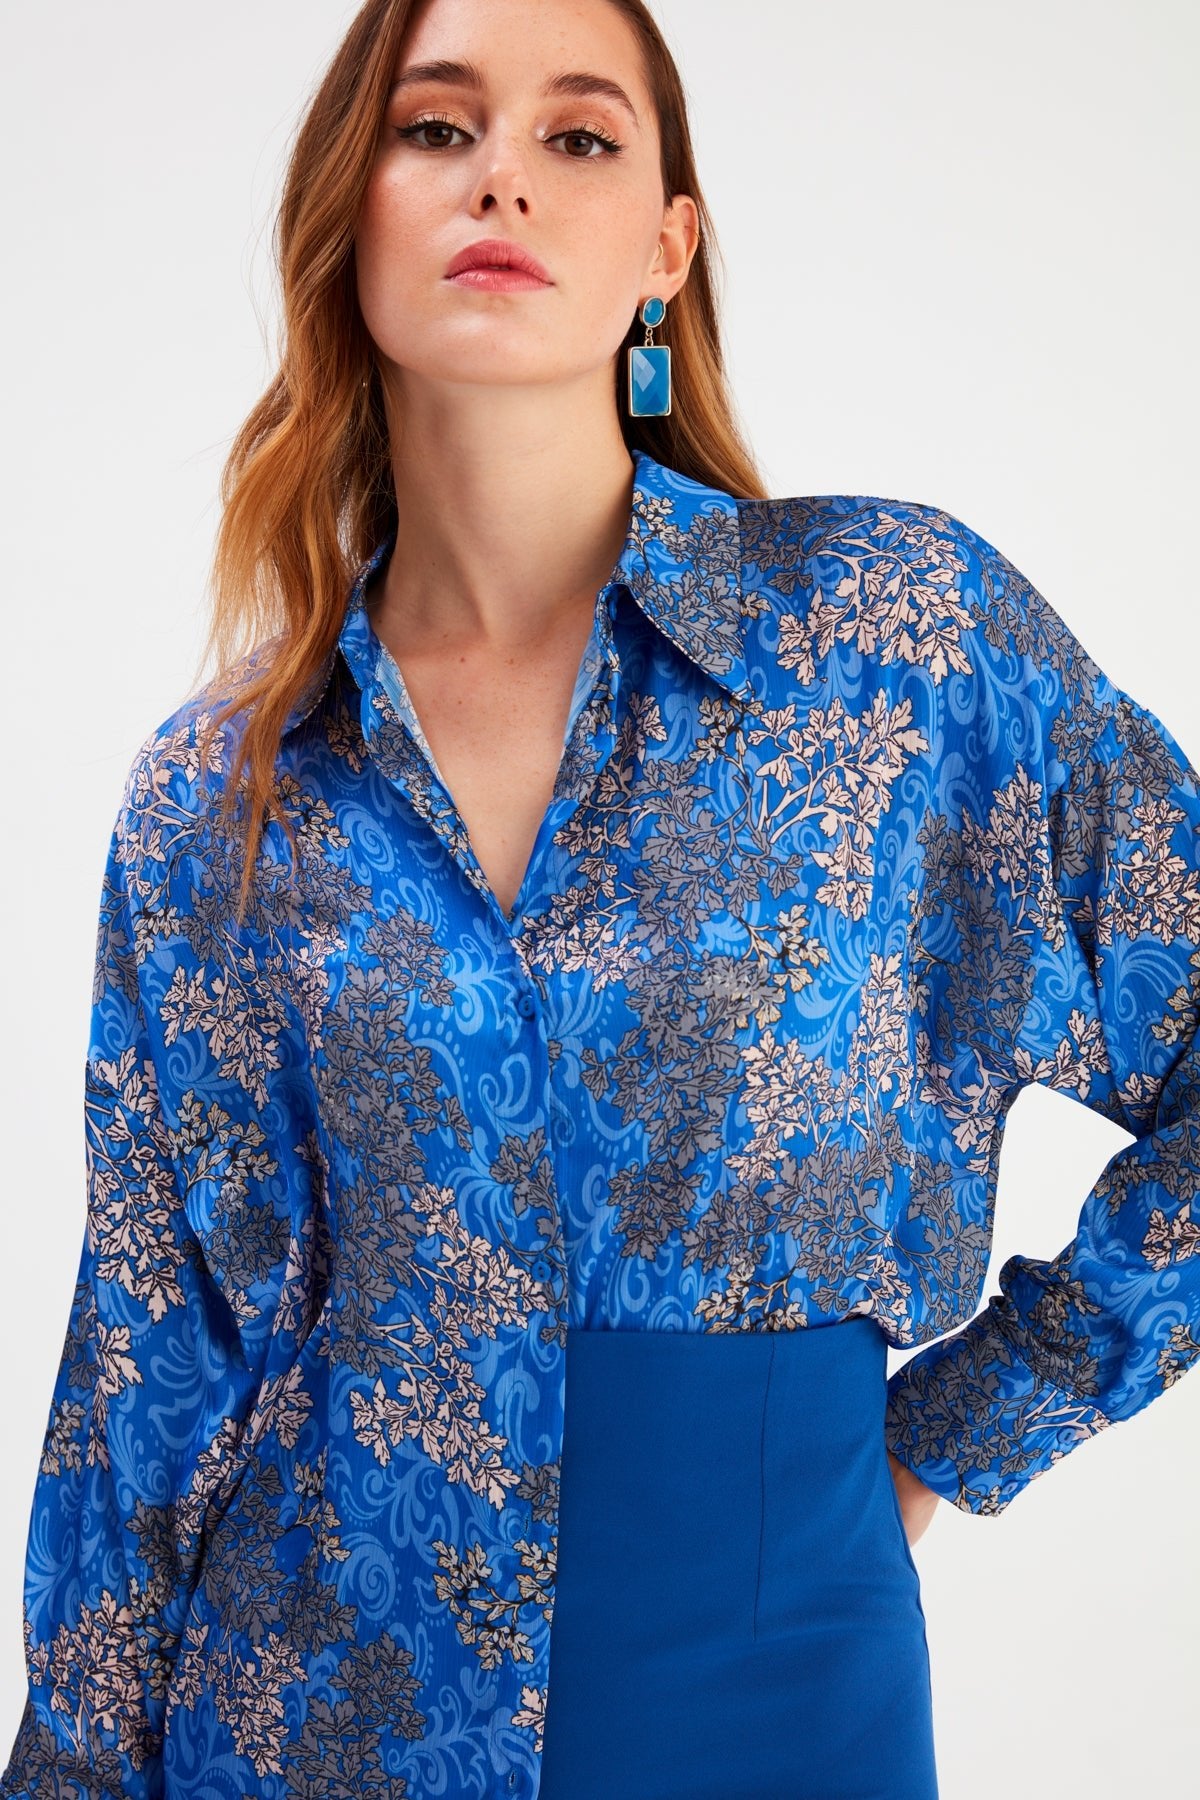 Dolman Sleeve Patterned Shirt - Azure Blue - Top - LussoCA